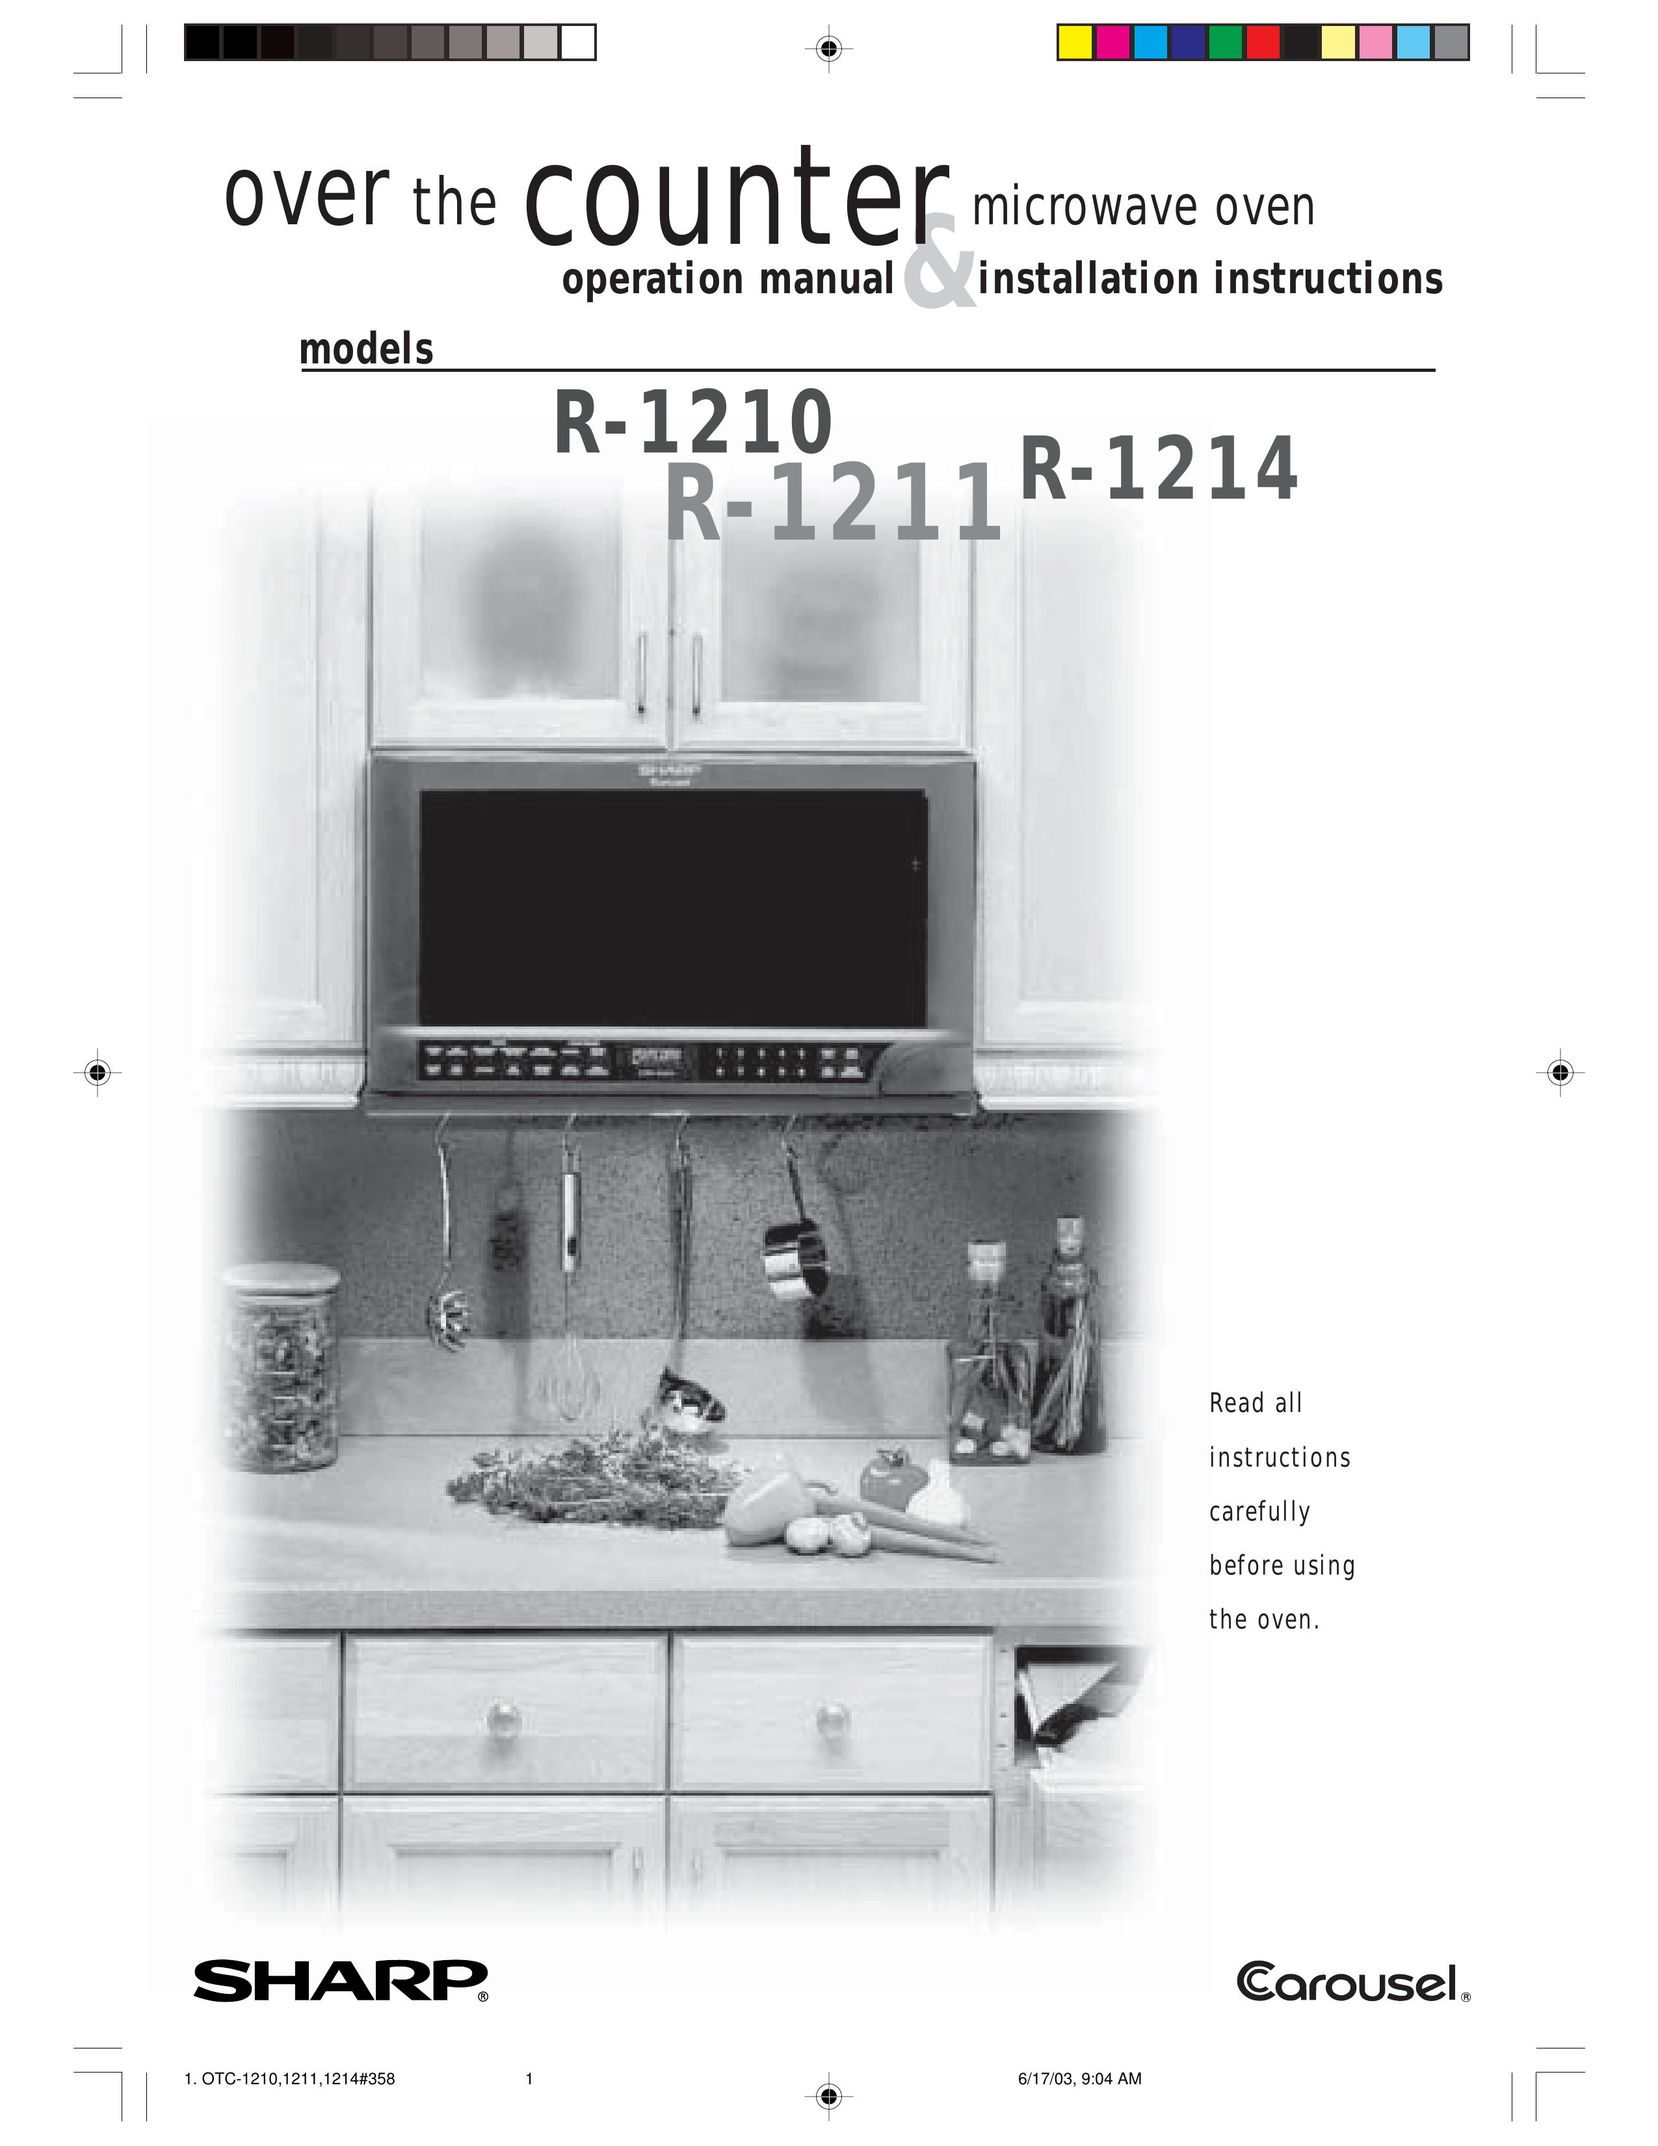 Sharp R-1210 Microwave Oven User Manual